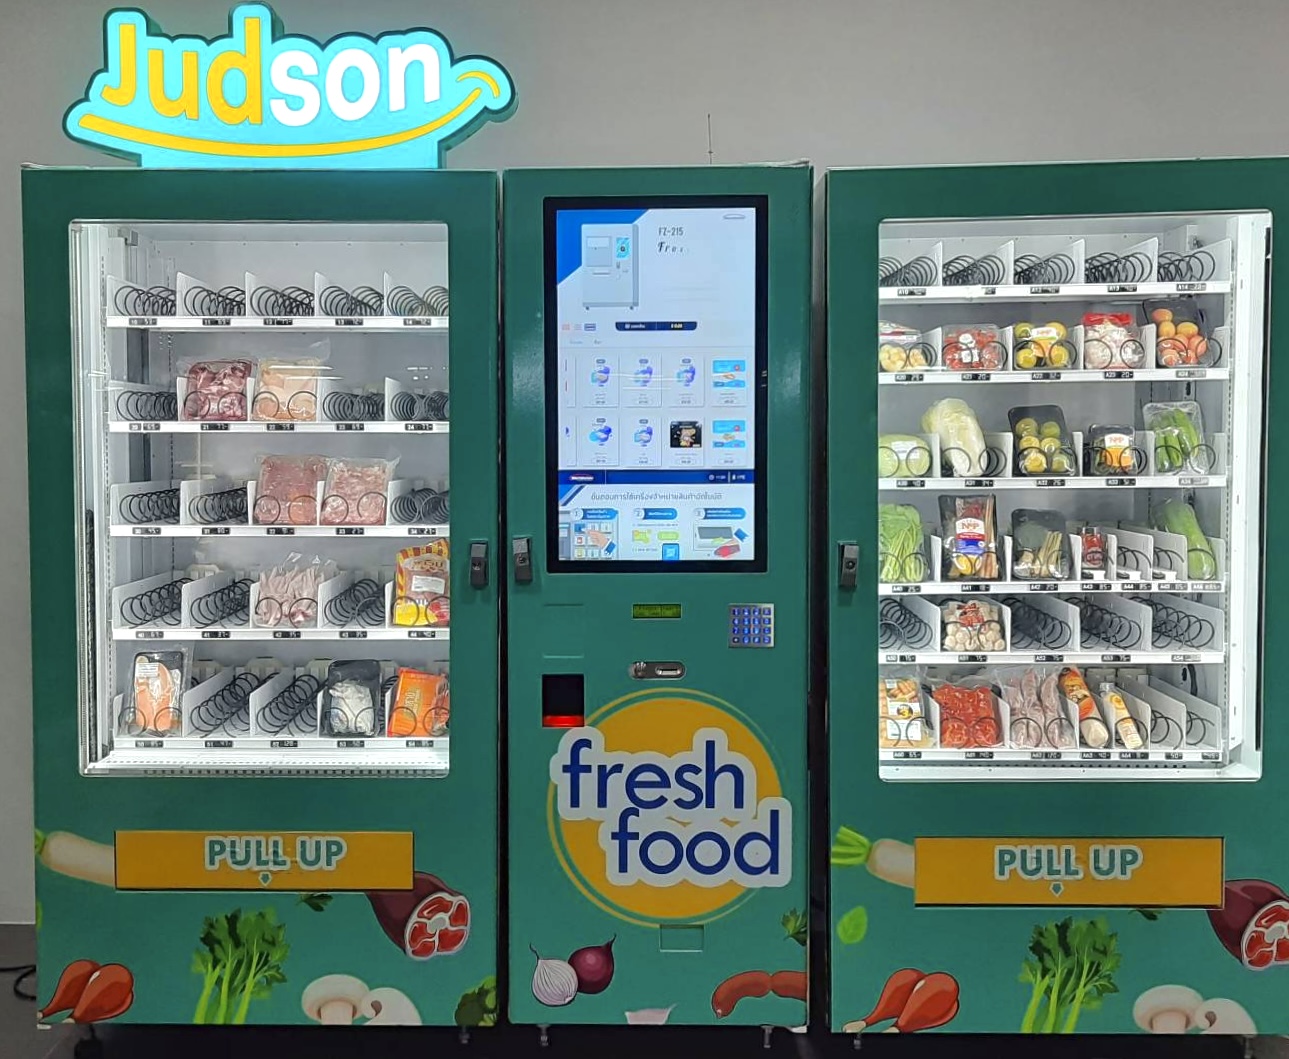 "Judson" Vending Machine